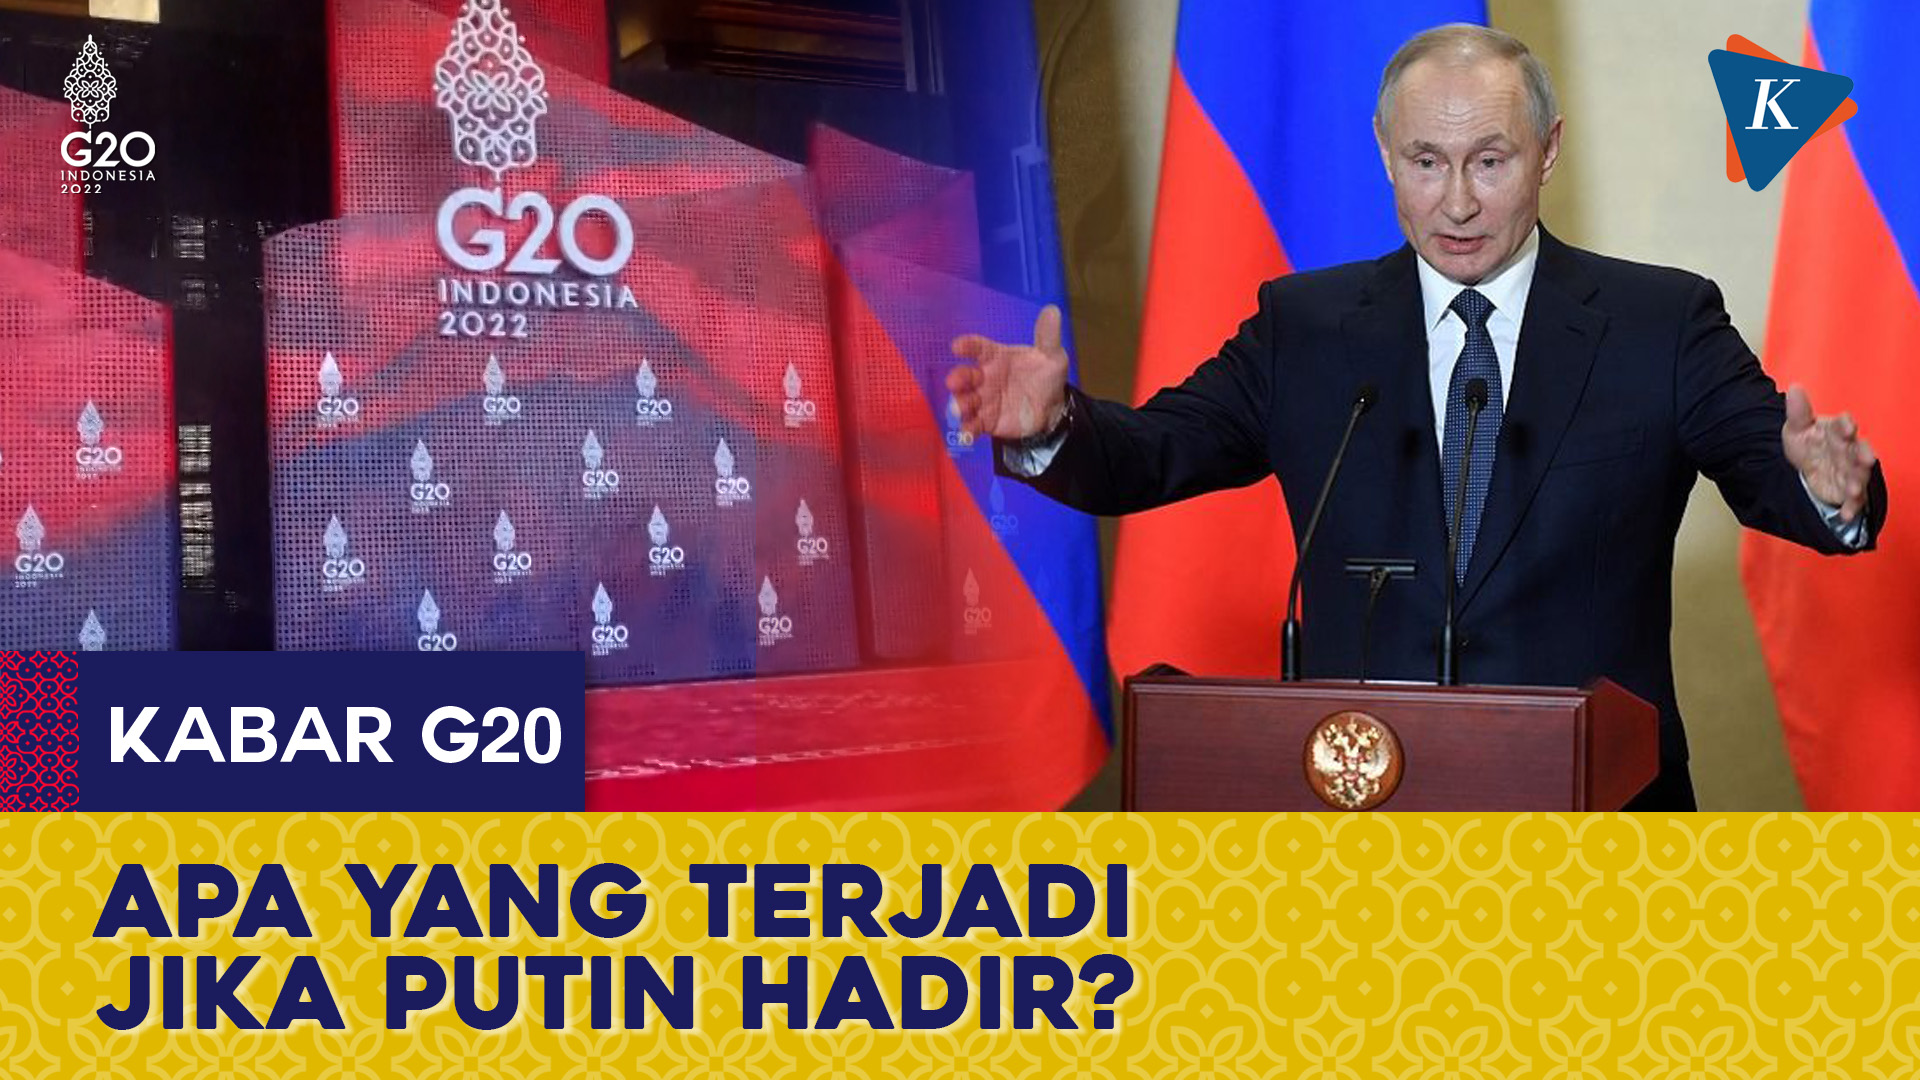 Andai Putin Datang ke KTT G20 Bali Kemungkinan Bakalan Dijauhi Para Delegasi Negara